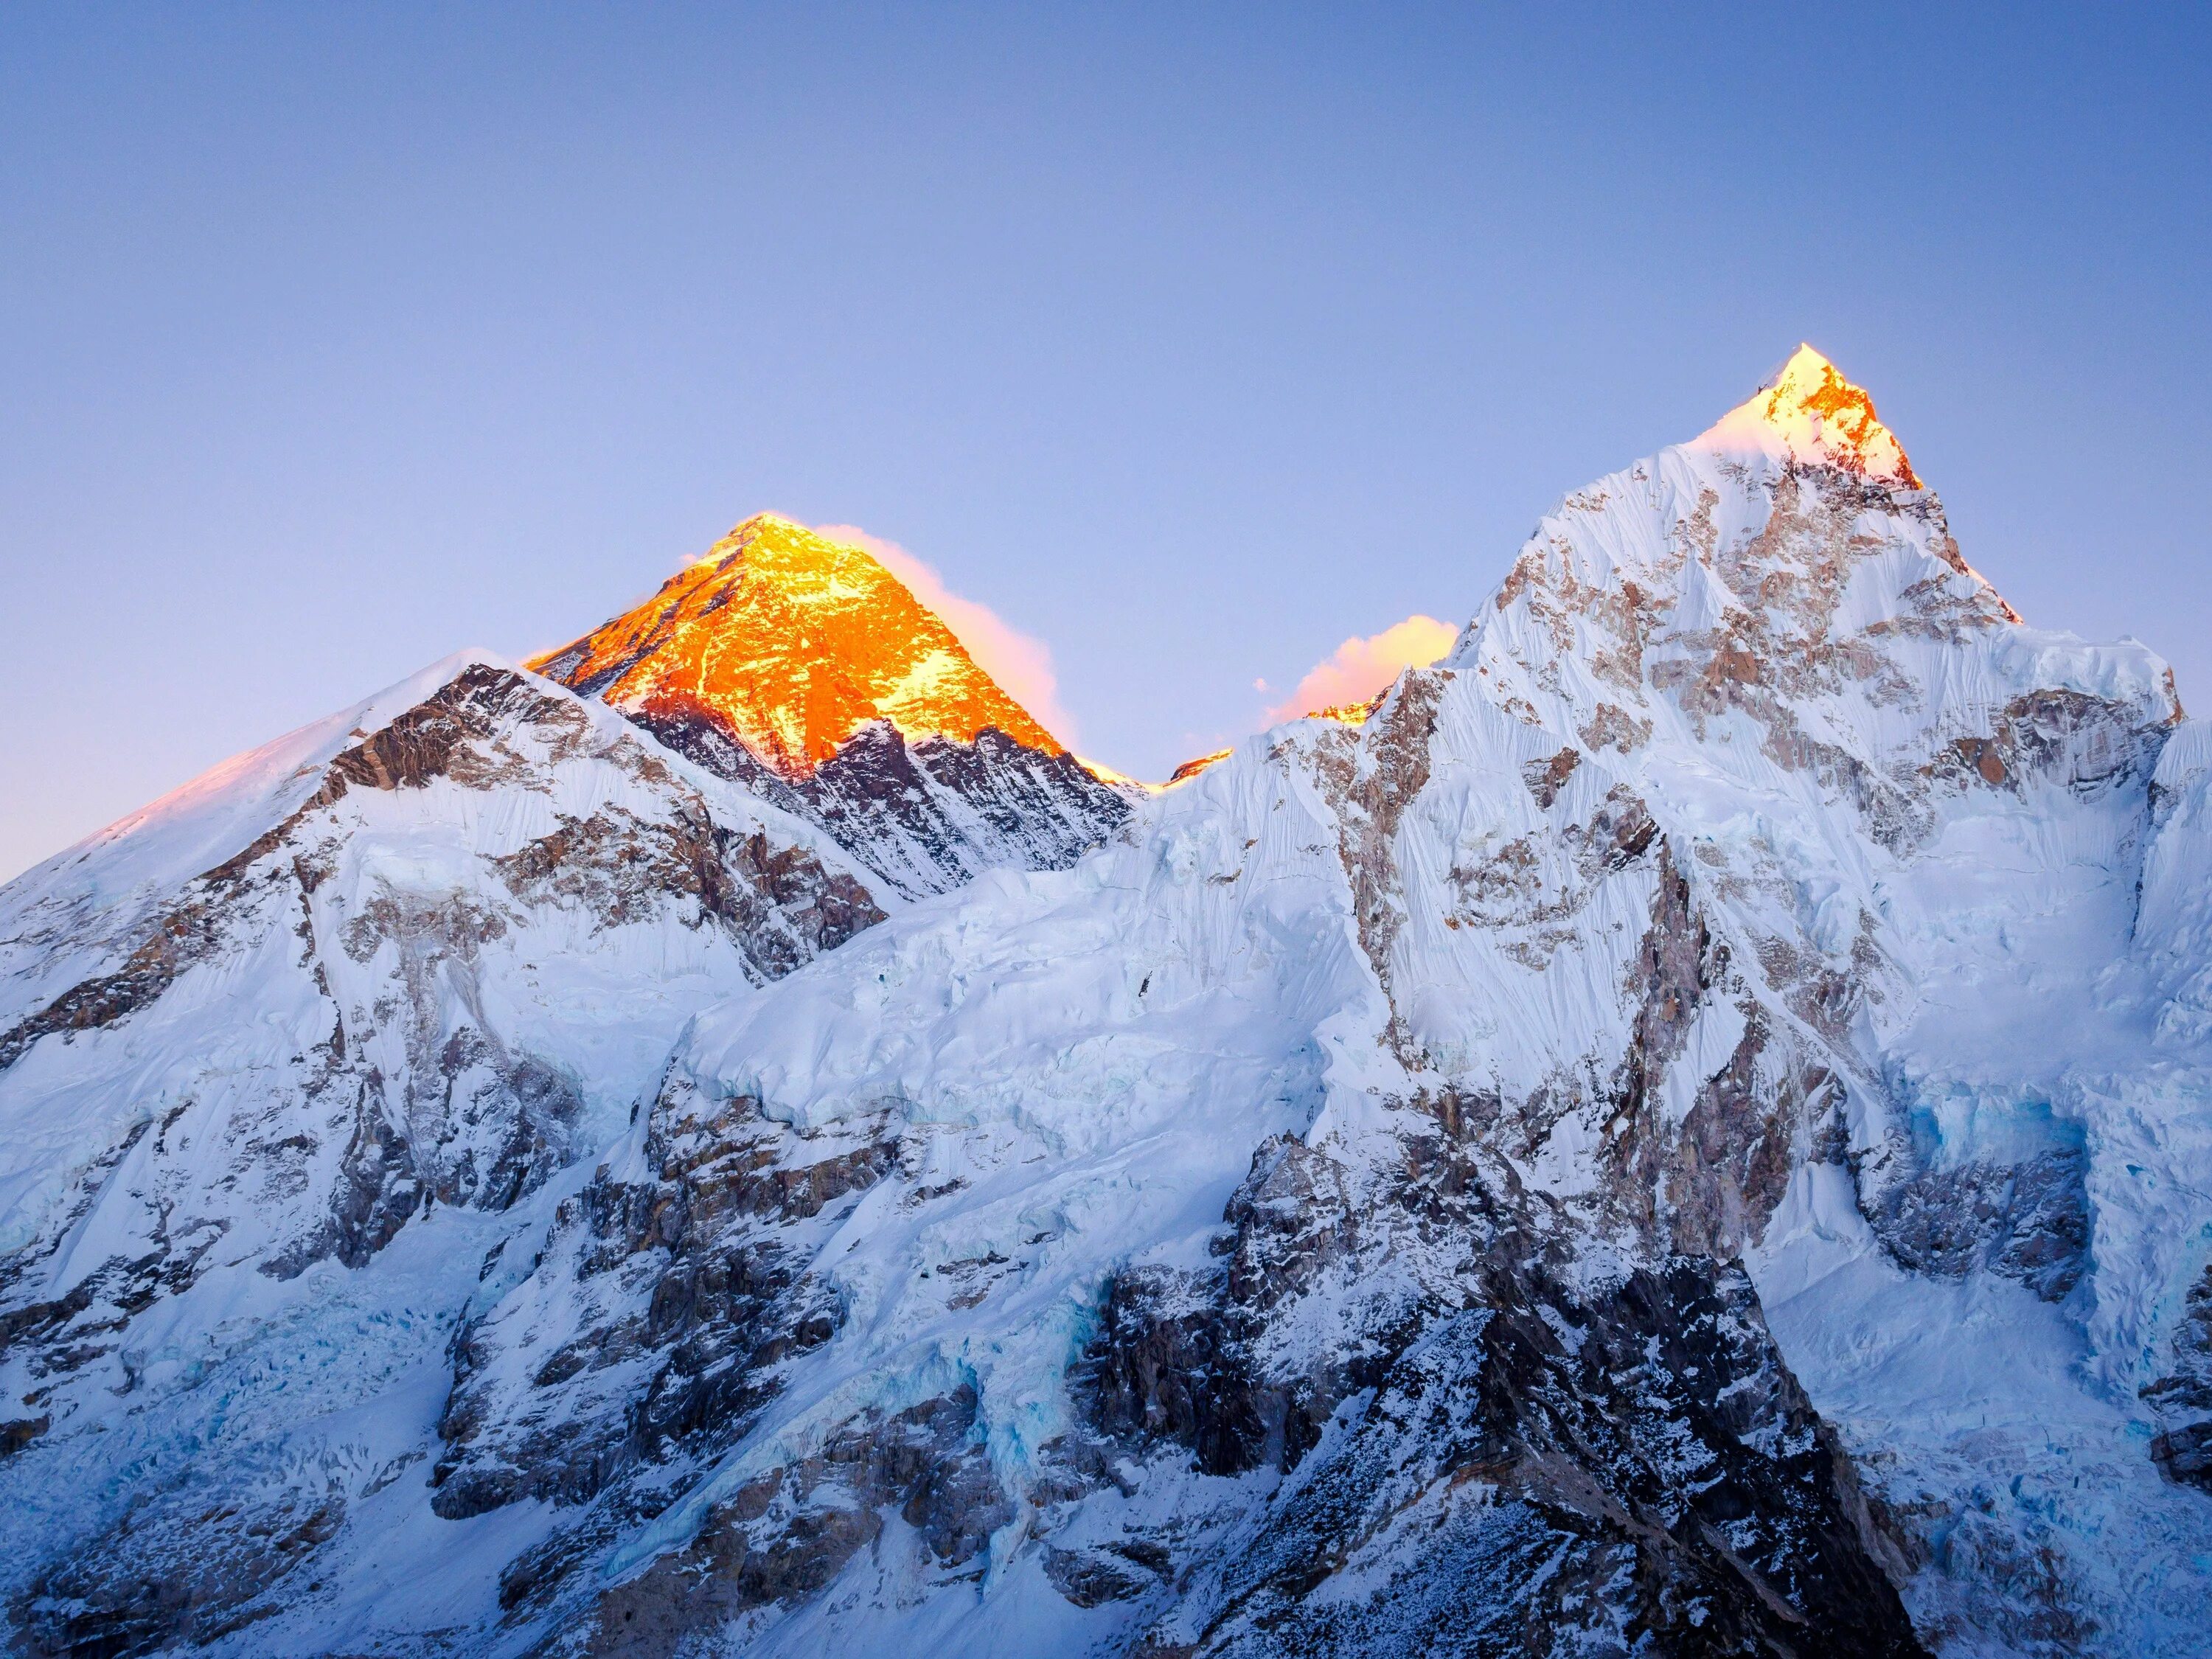 Білім шыңы. Гималаи Эверест Джомолунгма. Гора Эверест (Джомолунгма). Гималаи. «Сагарматха» = Эверест = Джомолунгма). Непал Гималаи Эверест.